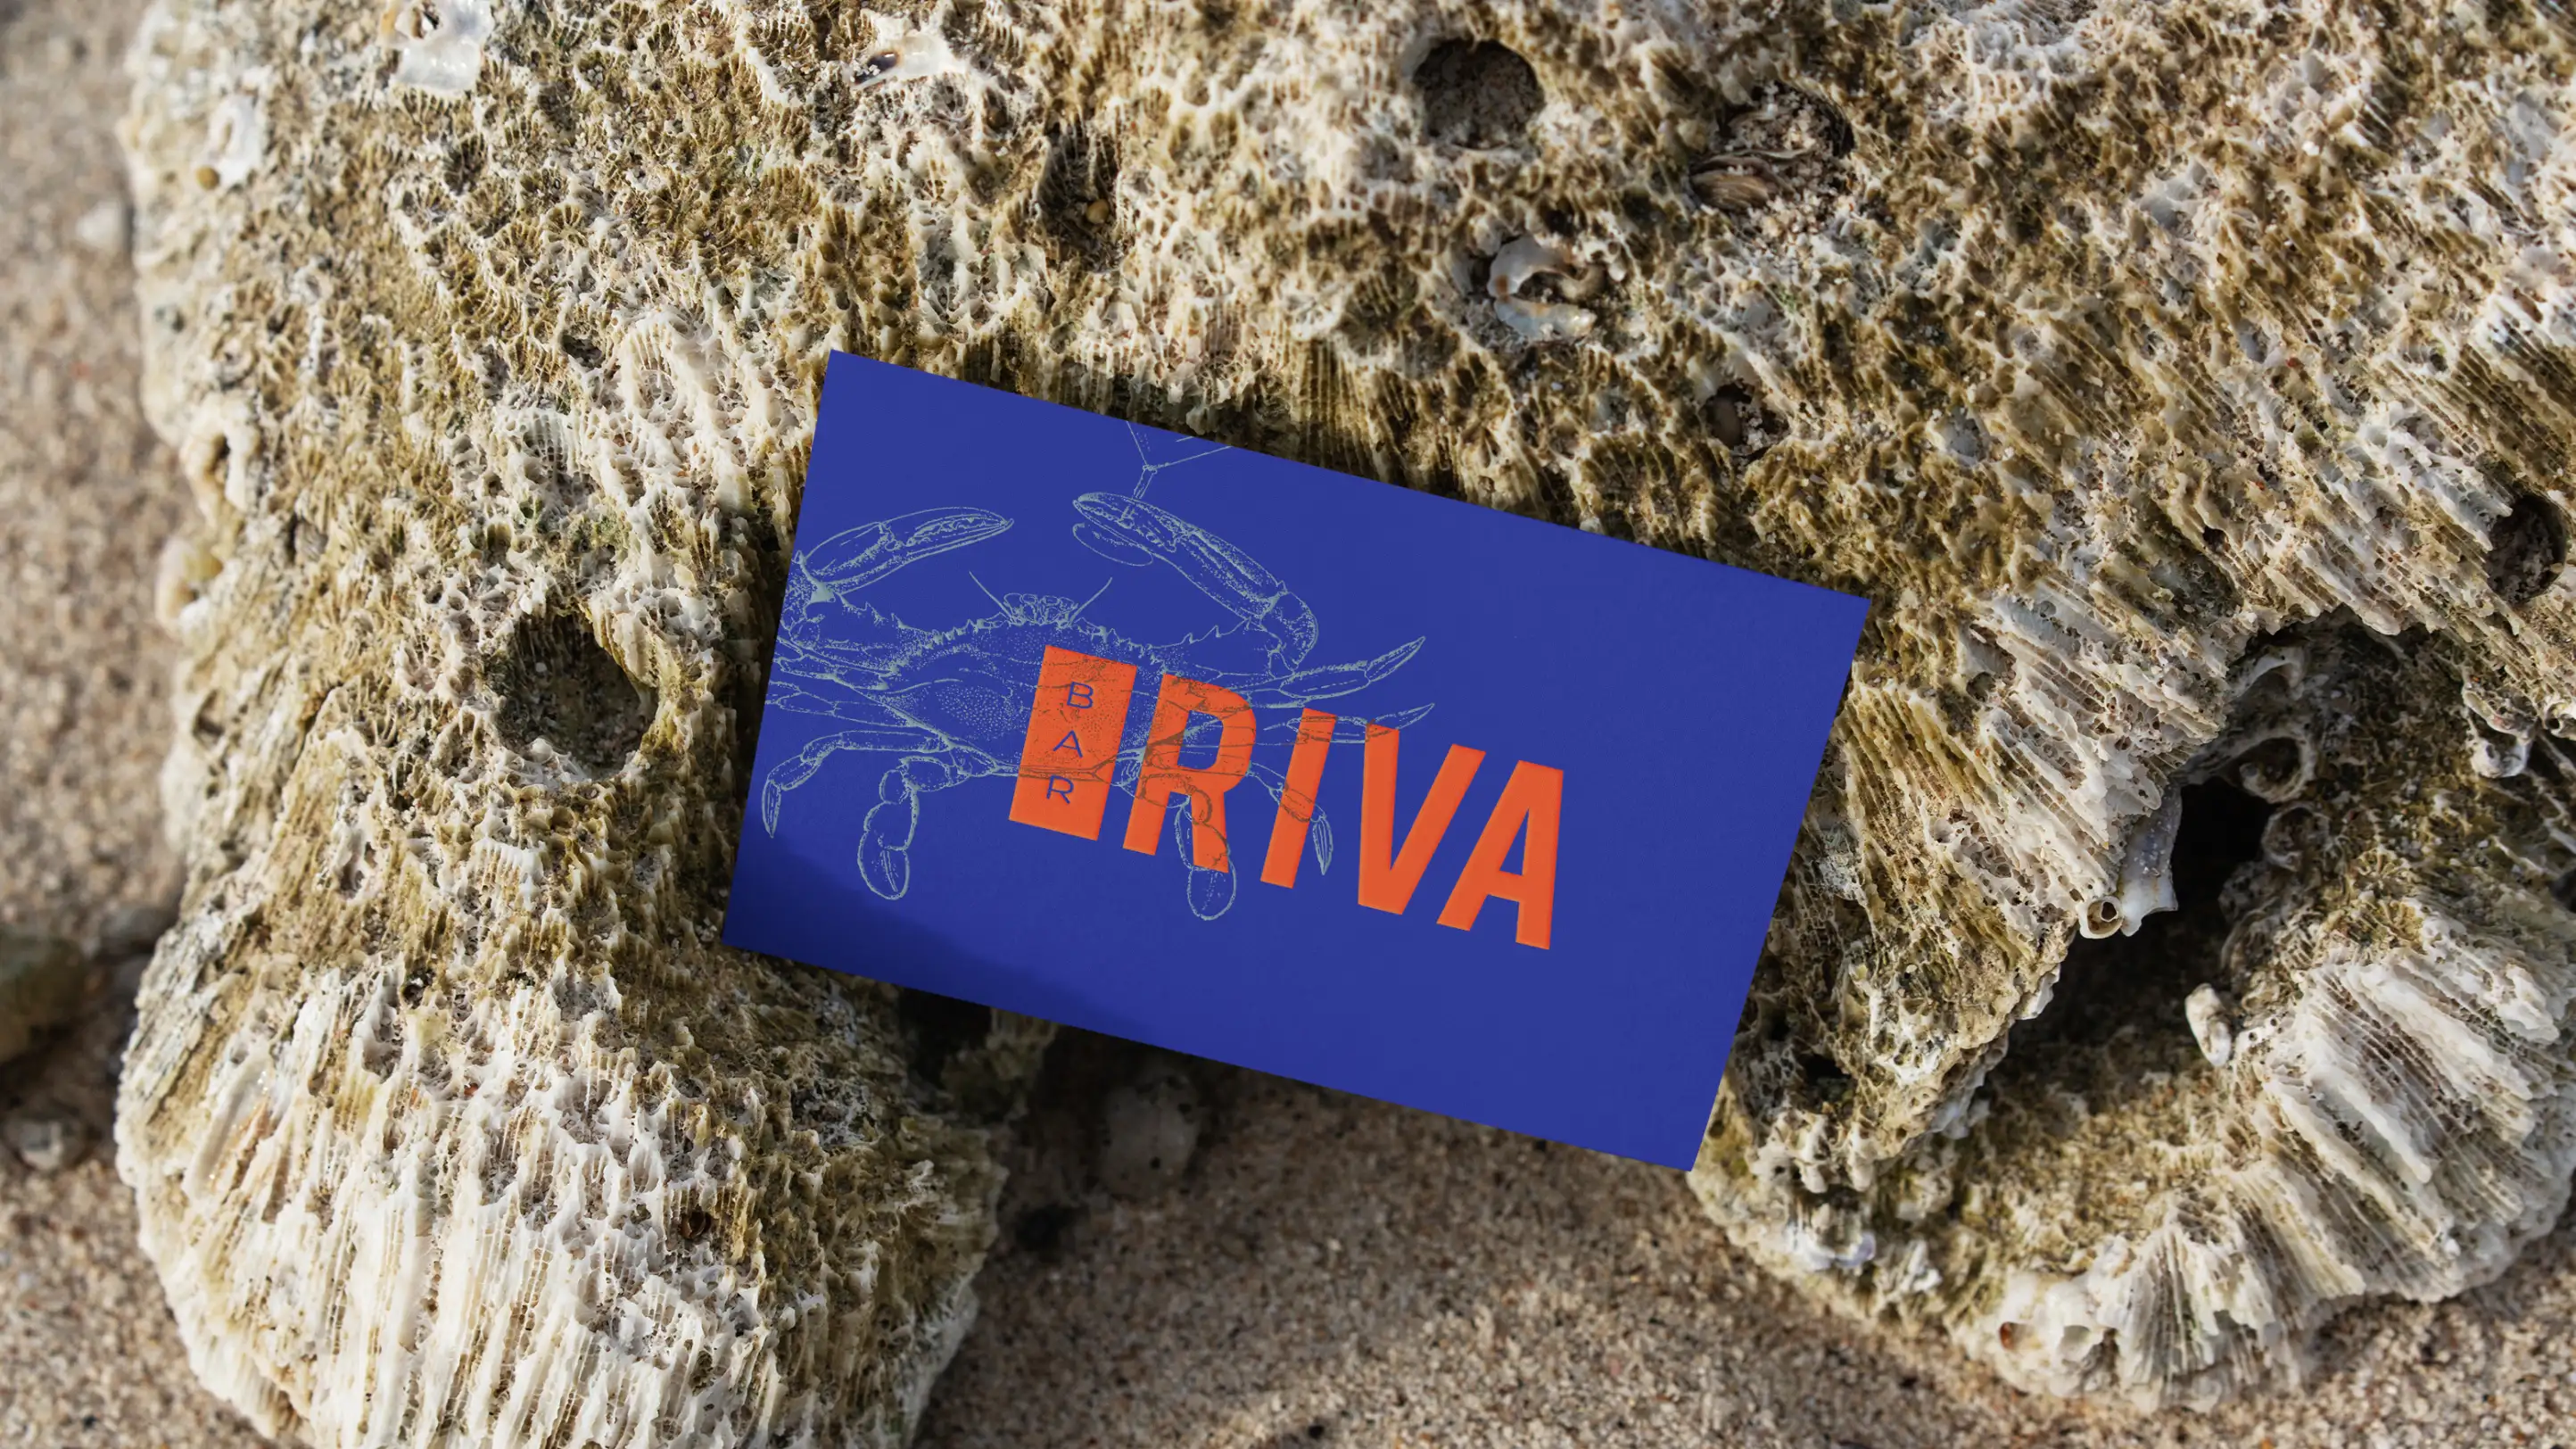 Bar Riva logo on blue business card.